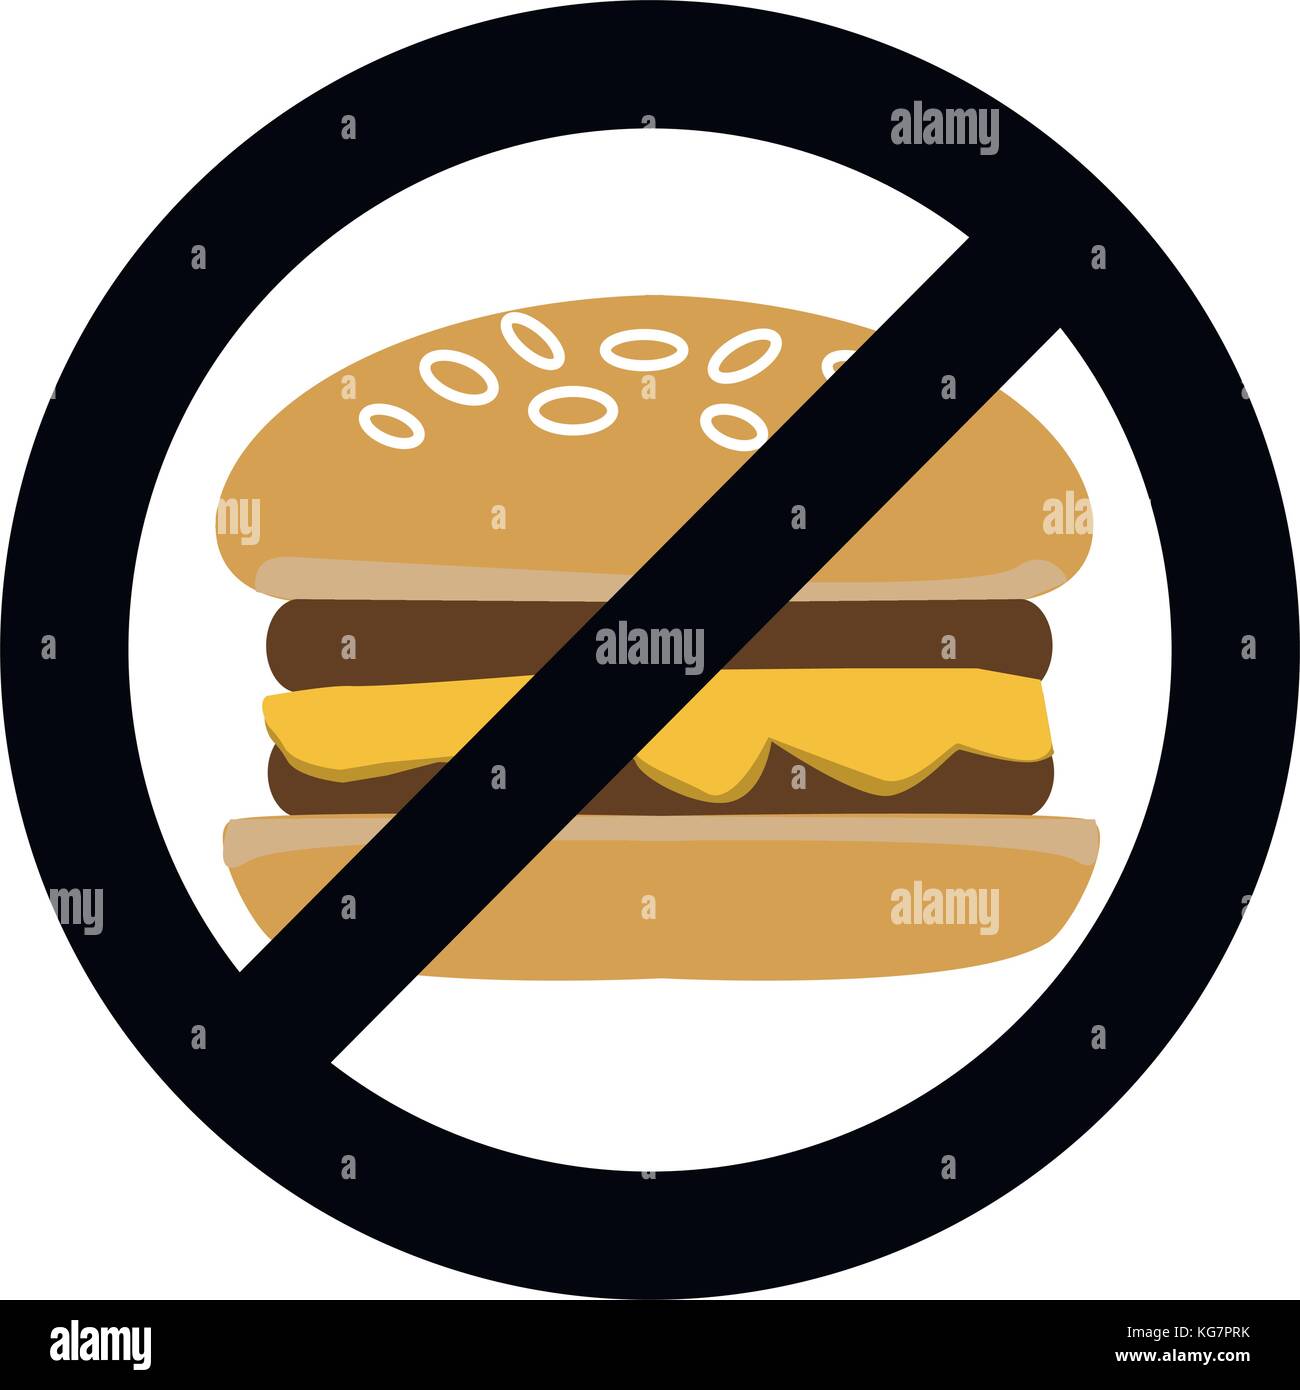 kein-fast-food-verbot-hamburger-symbol-fast-food-burger-verboten-verboten-ungesunden-fastfood-sandwich-vektor-abbildung-kg7prk.jpg